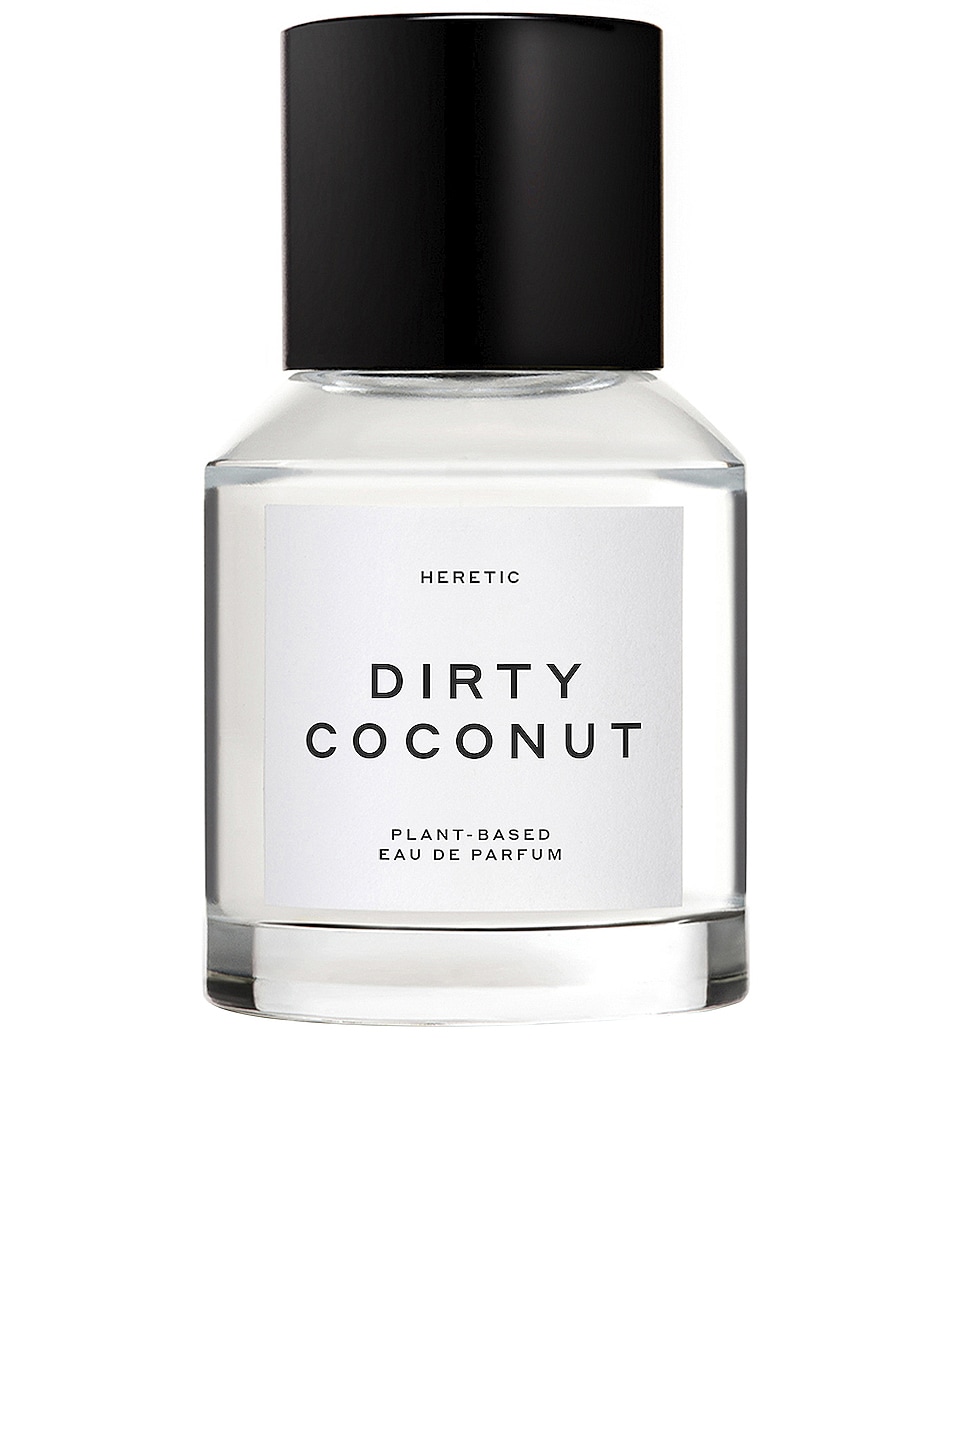 Dirty Coconut Eau de Parfum in Beauty: NA